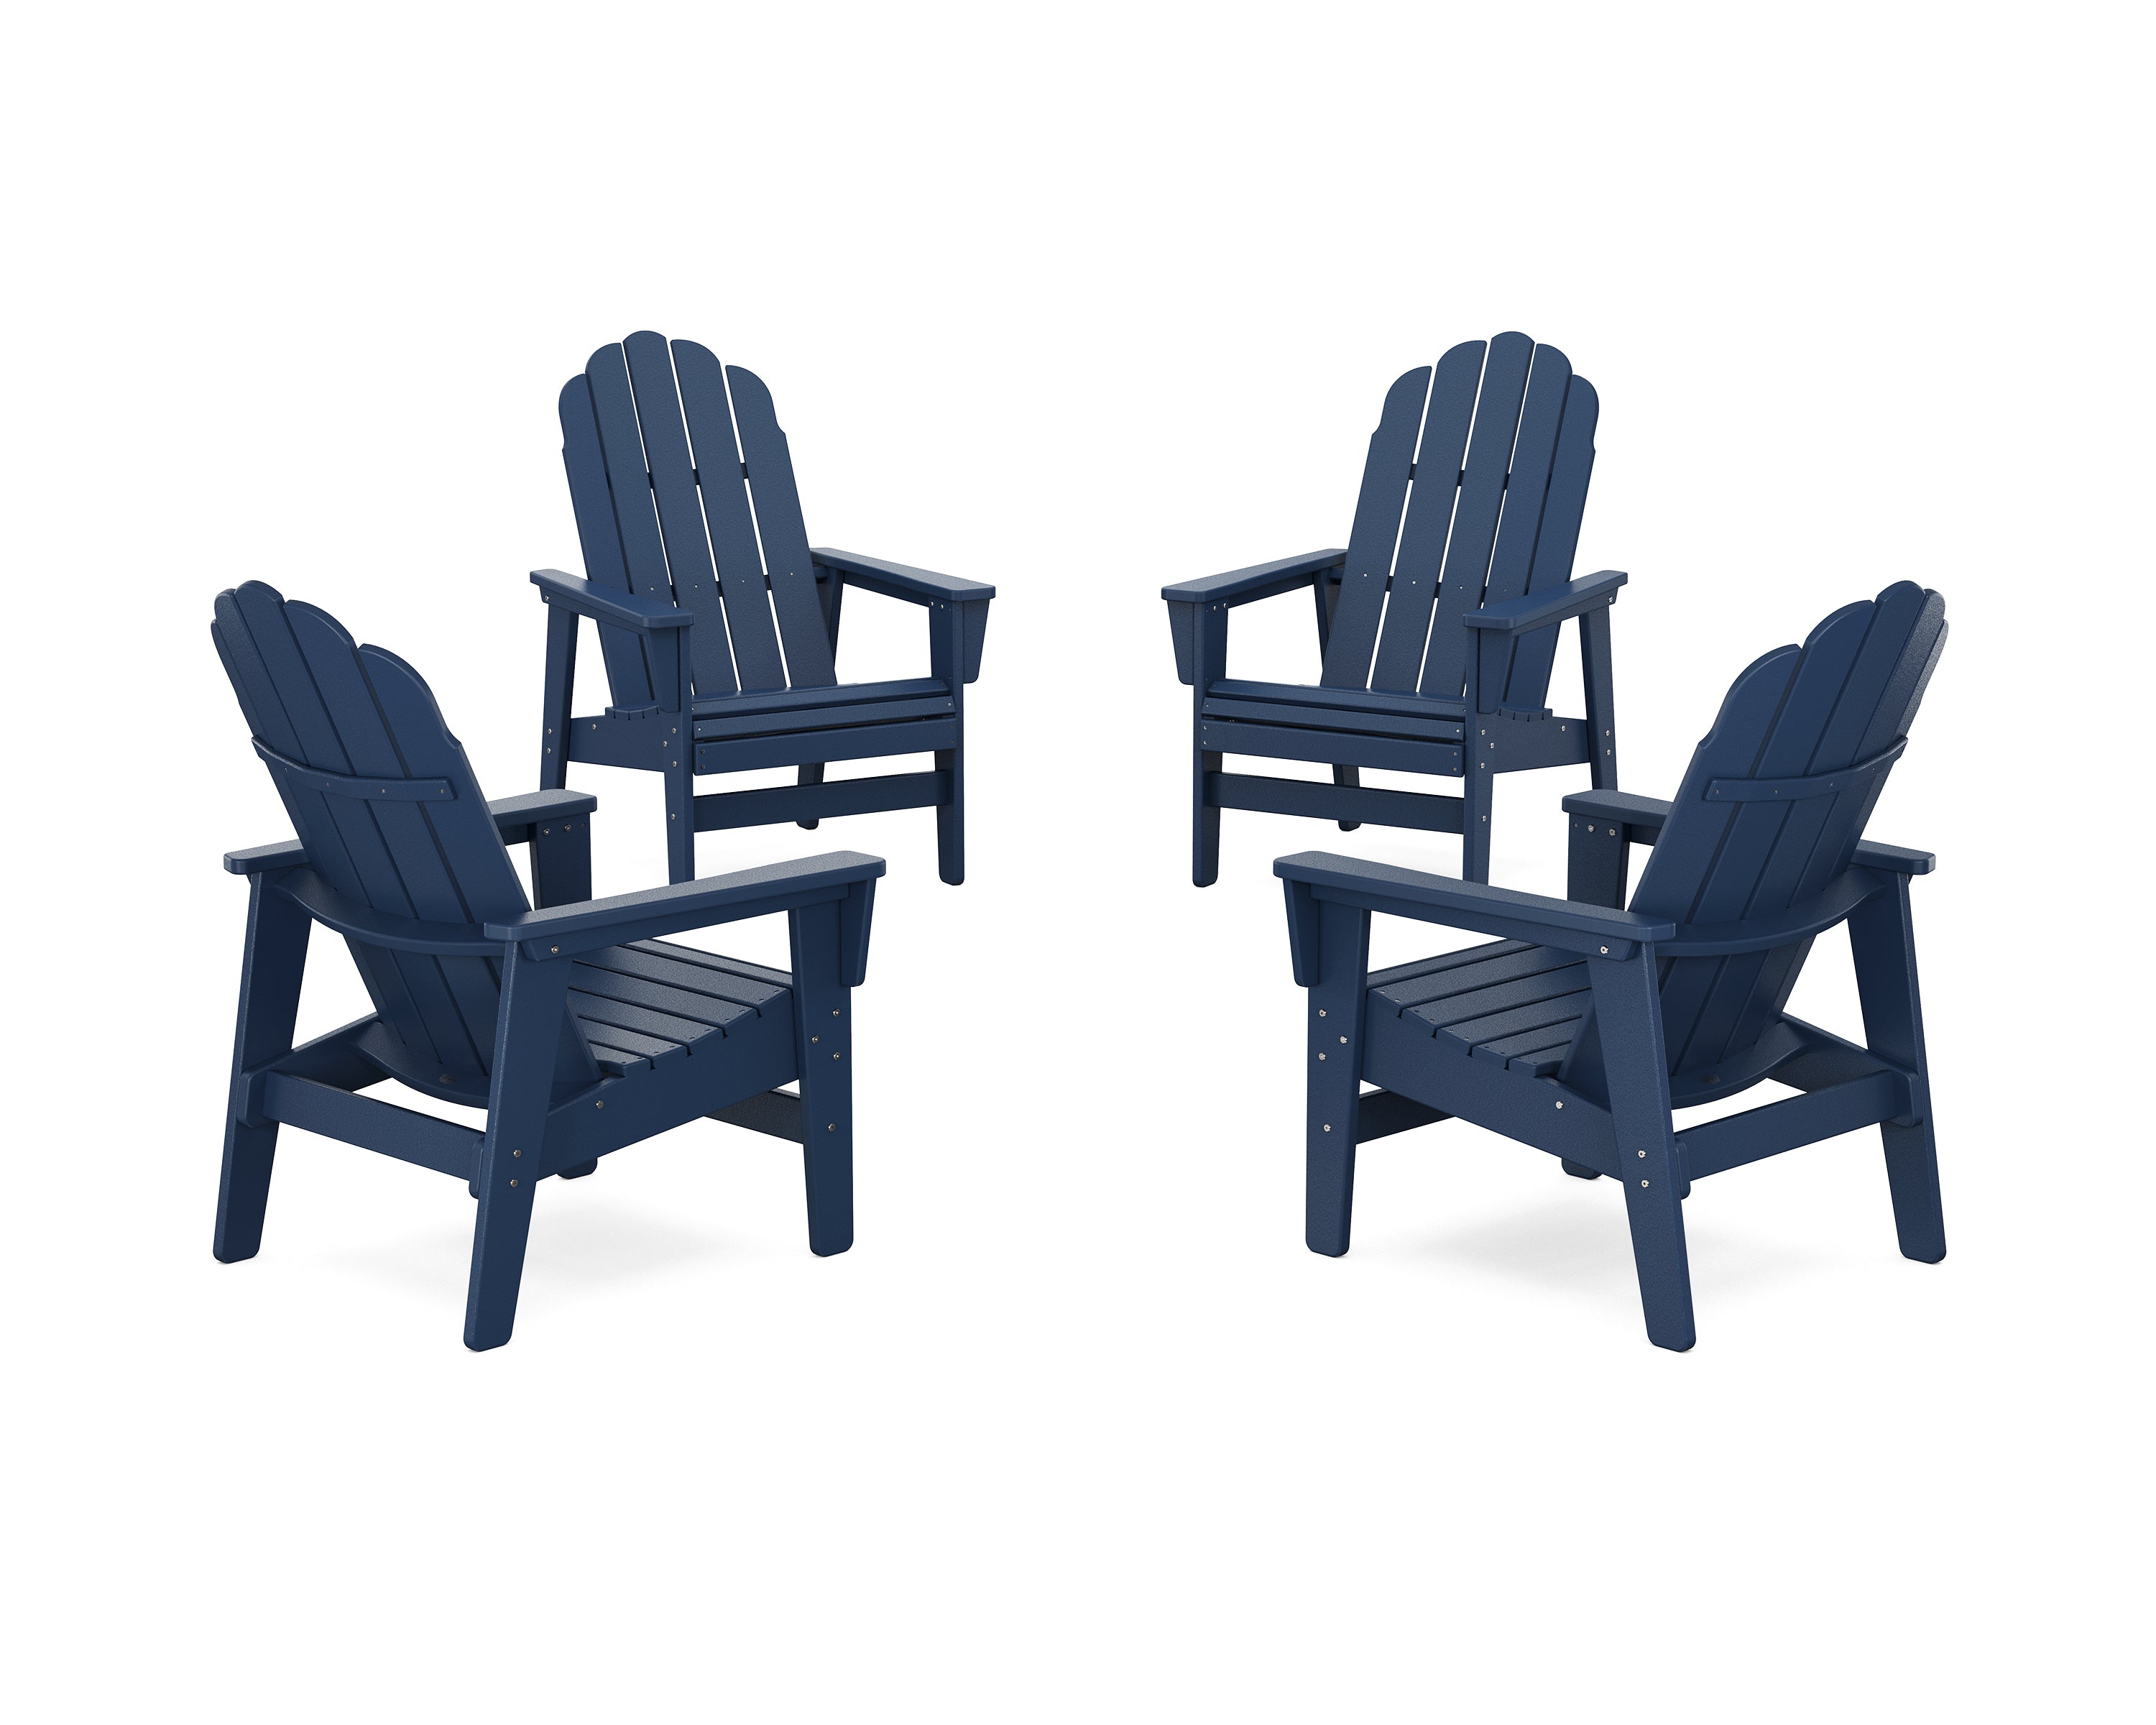 POLYWOOD® 4-Piece Vineyard Grand Upright Adirondack Chair Conversation Set in Navy